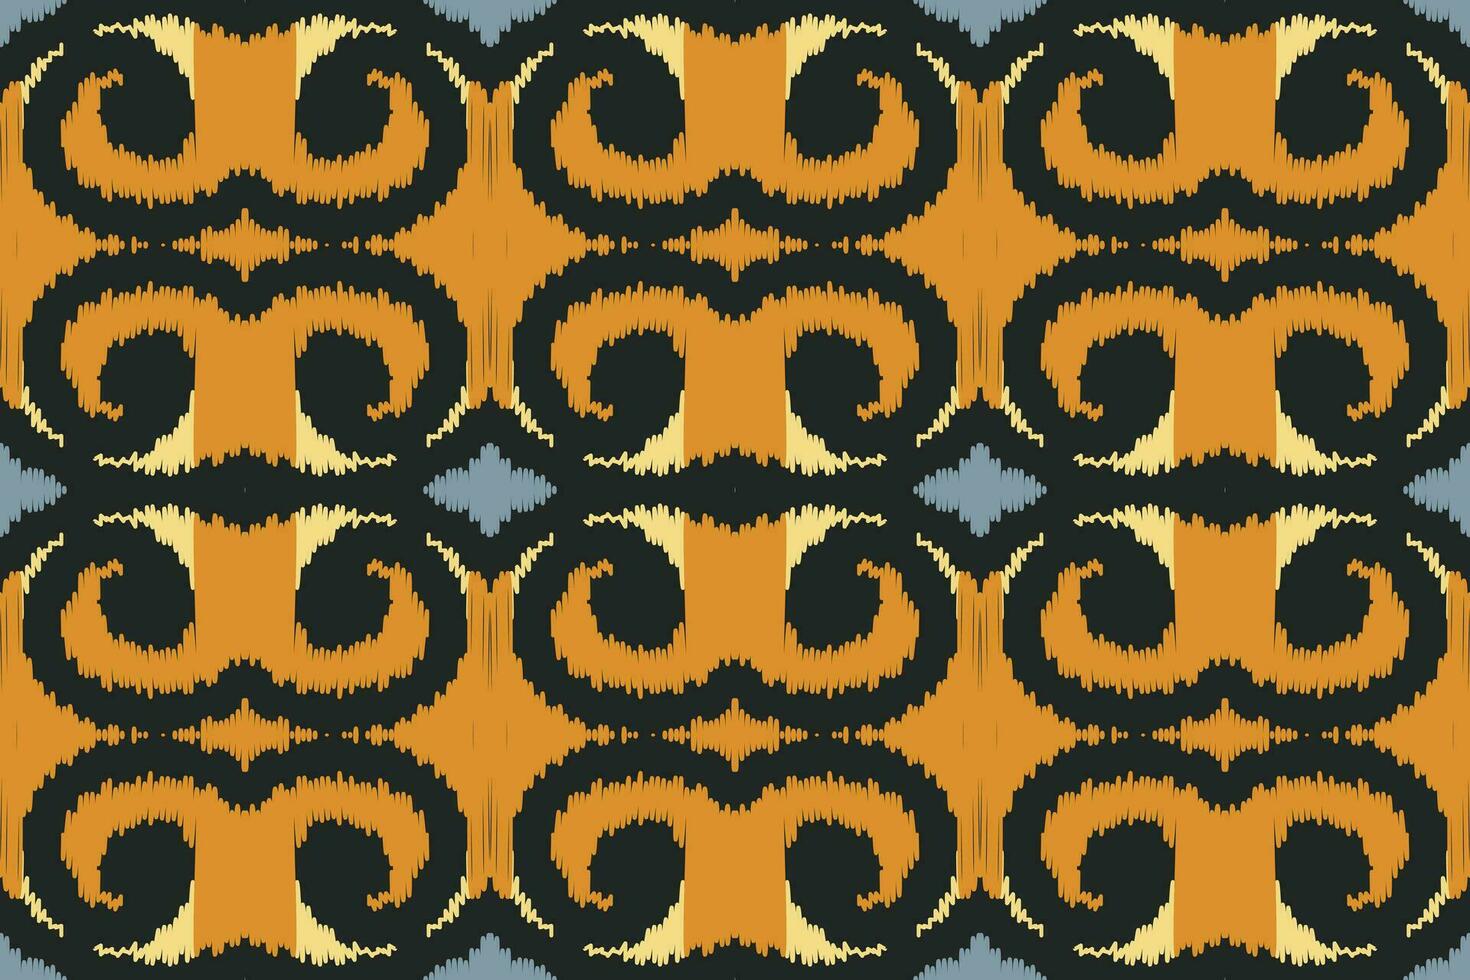 motivo ikat floral cachemir bordado antecedentes. ikat damasco geométrico étnico oriental modelo tradicional. ikat azteca estilo resumen diseño para impresión textura,tela,sari,sari,alfombra. vector